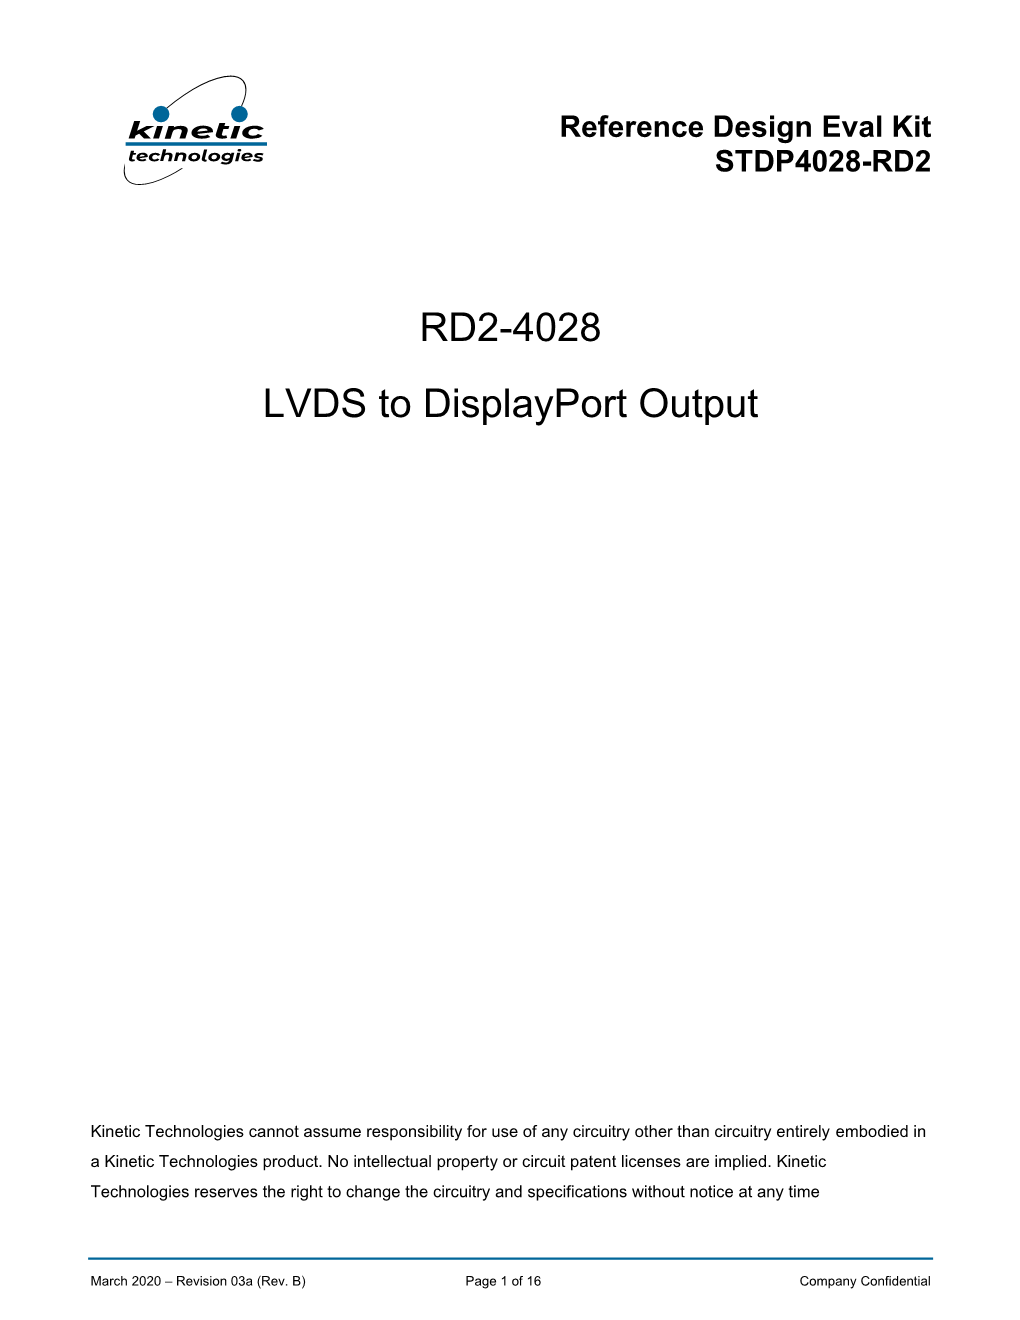 RD2-4028 LVDS to Displayport Output